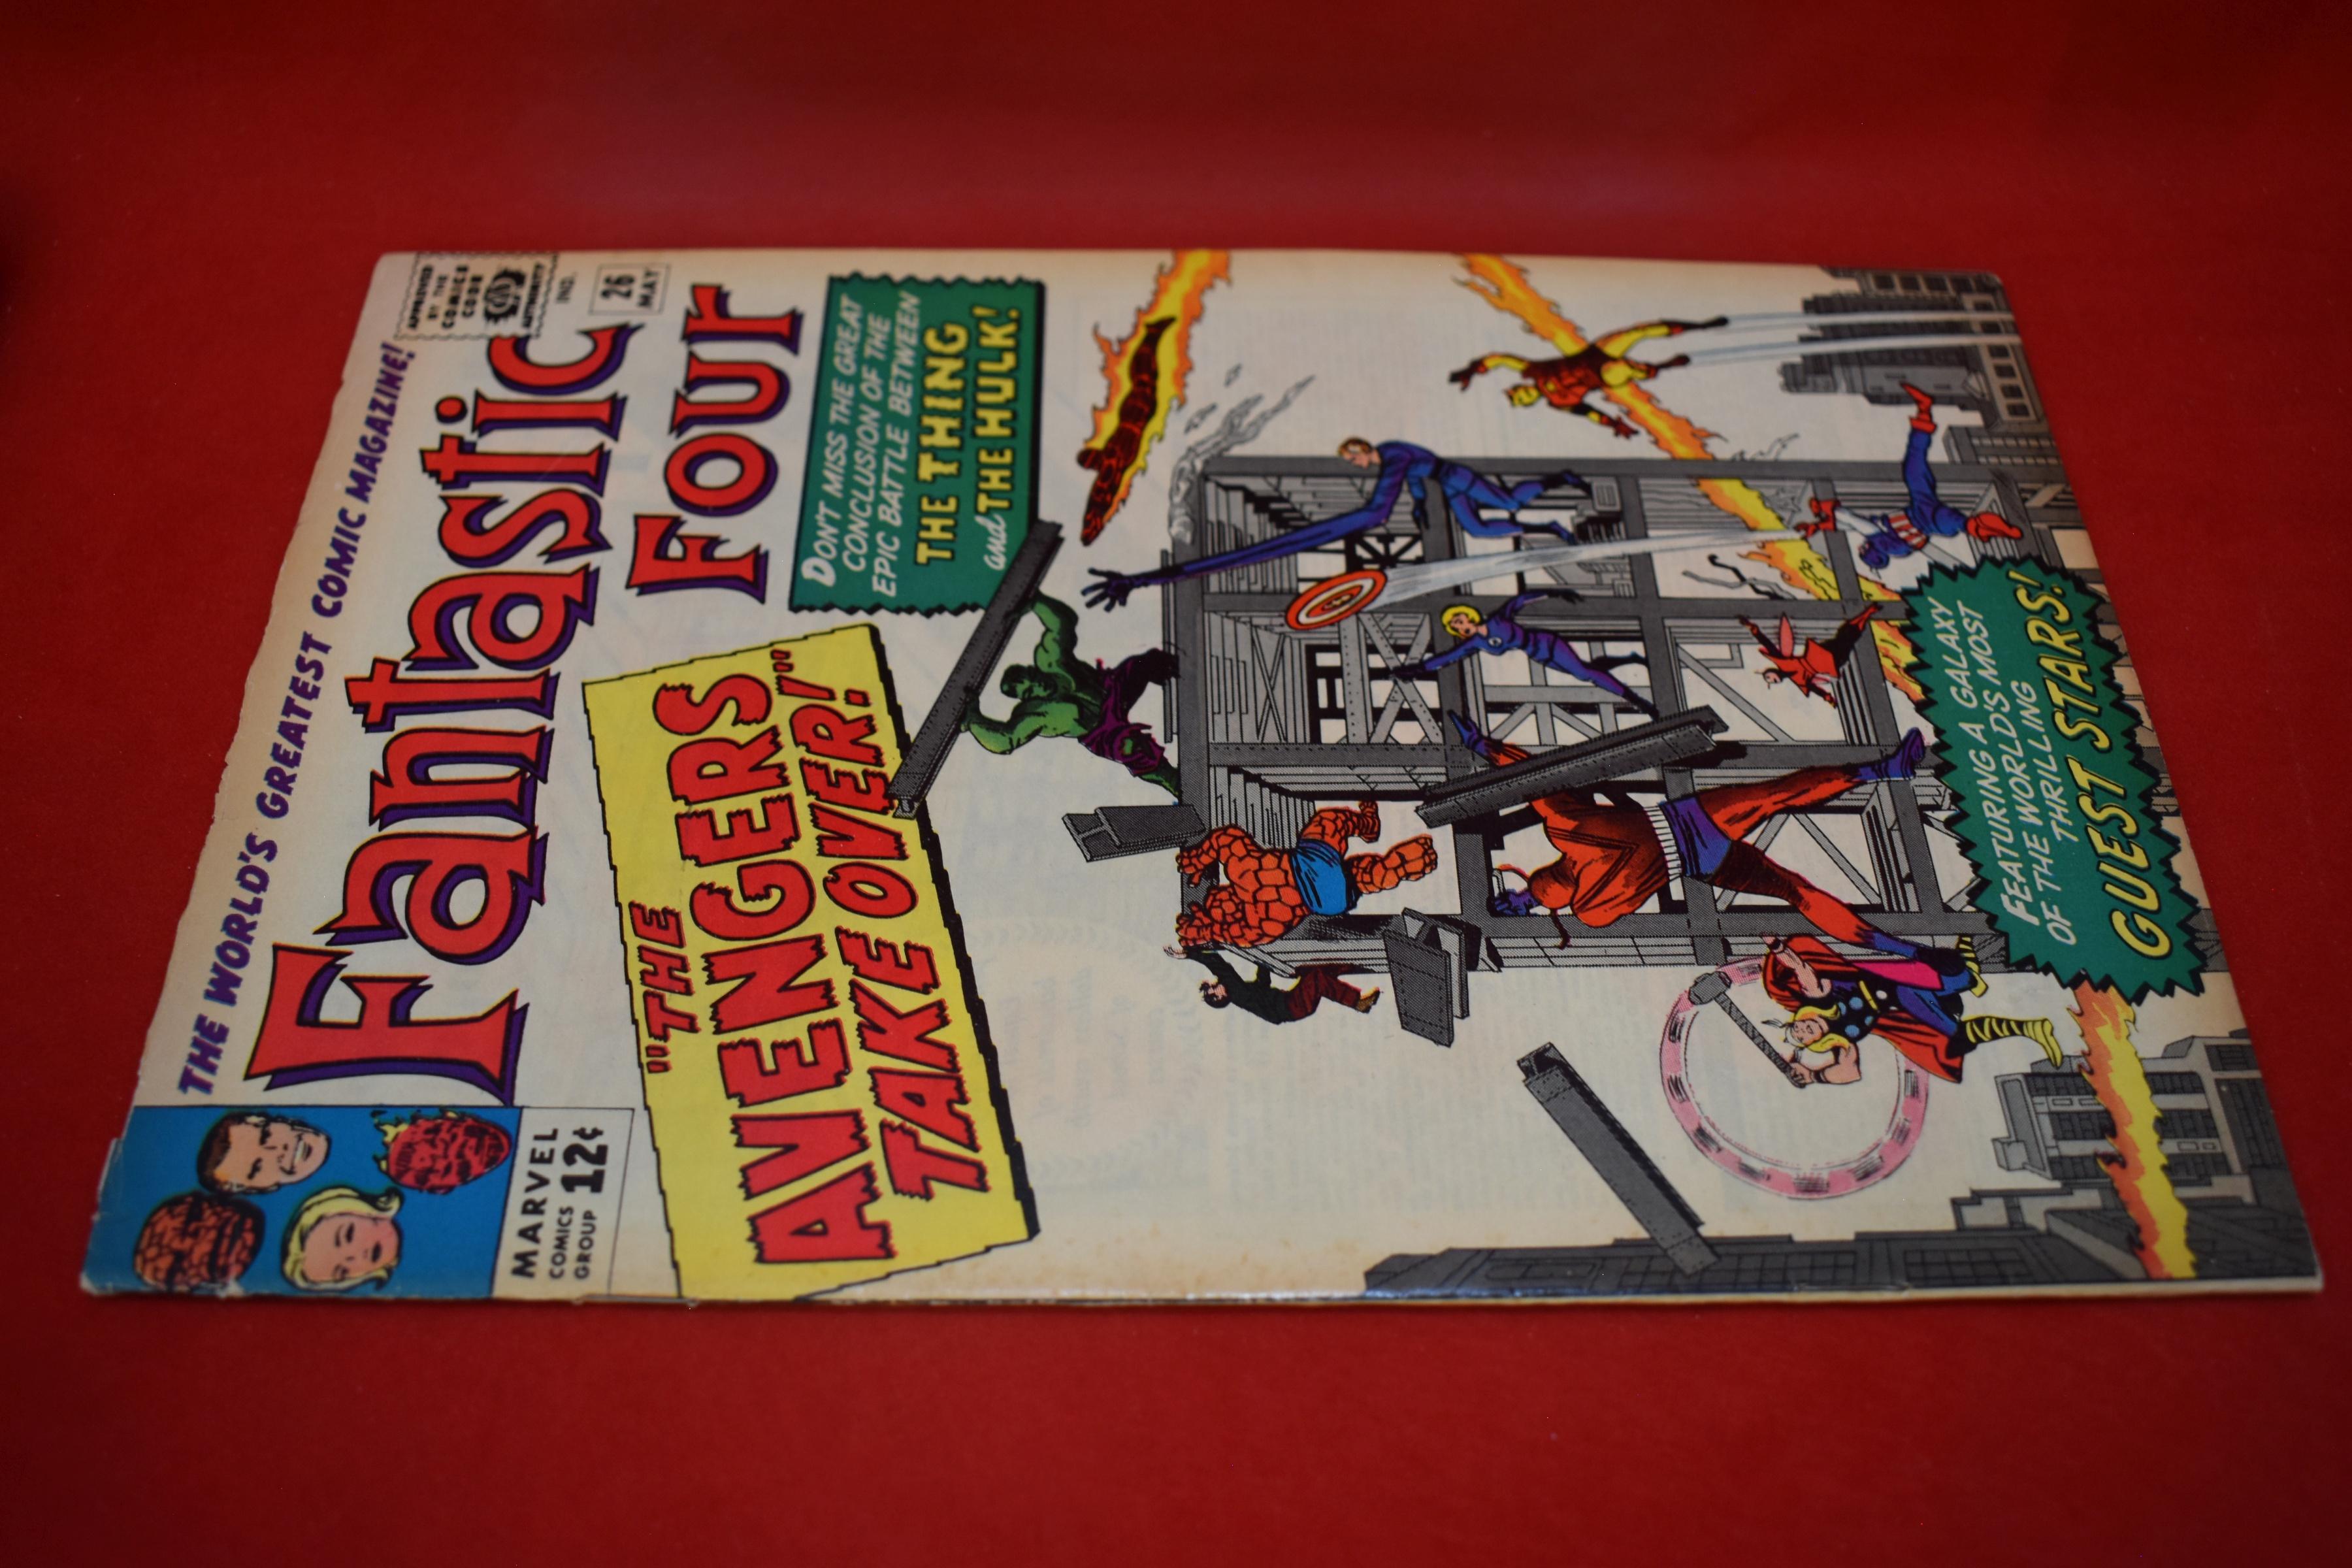 FANTASTIC FOUR #26 | KEY CLASSIC BATTLE AVENGERS & FANTASTIC FOUR VS THE HULK! | NICE 1964 BOOK!